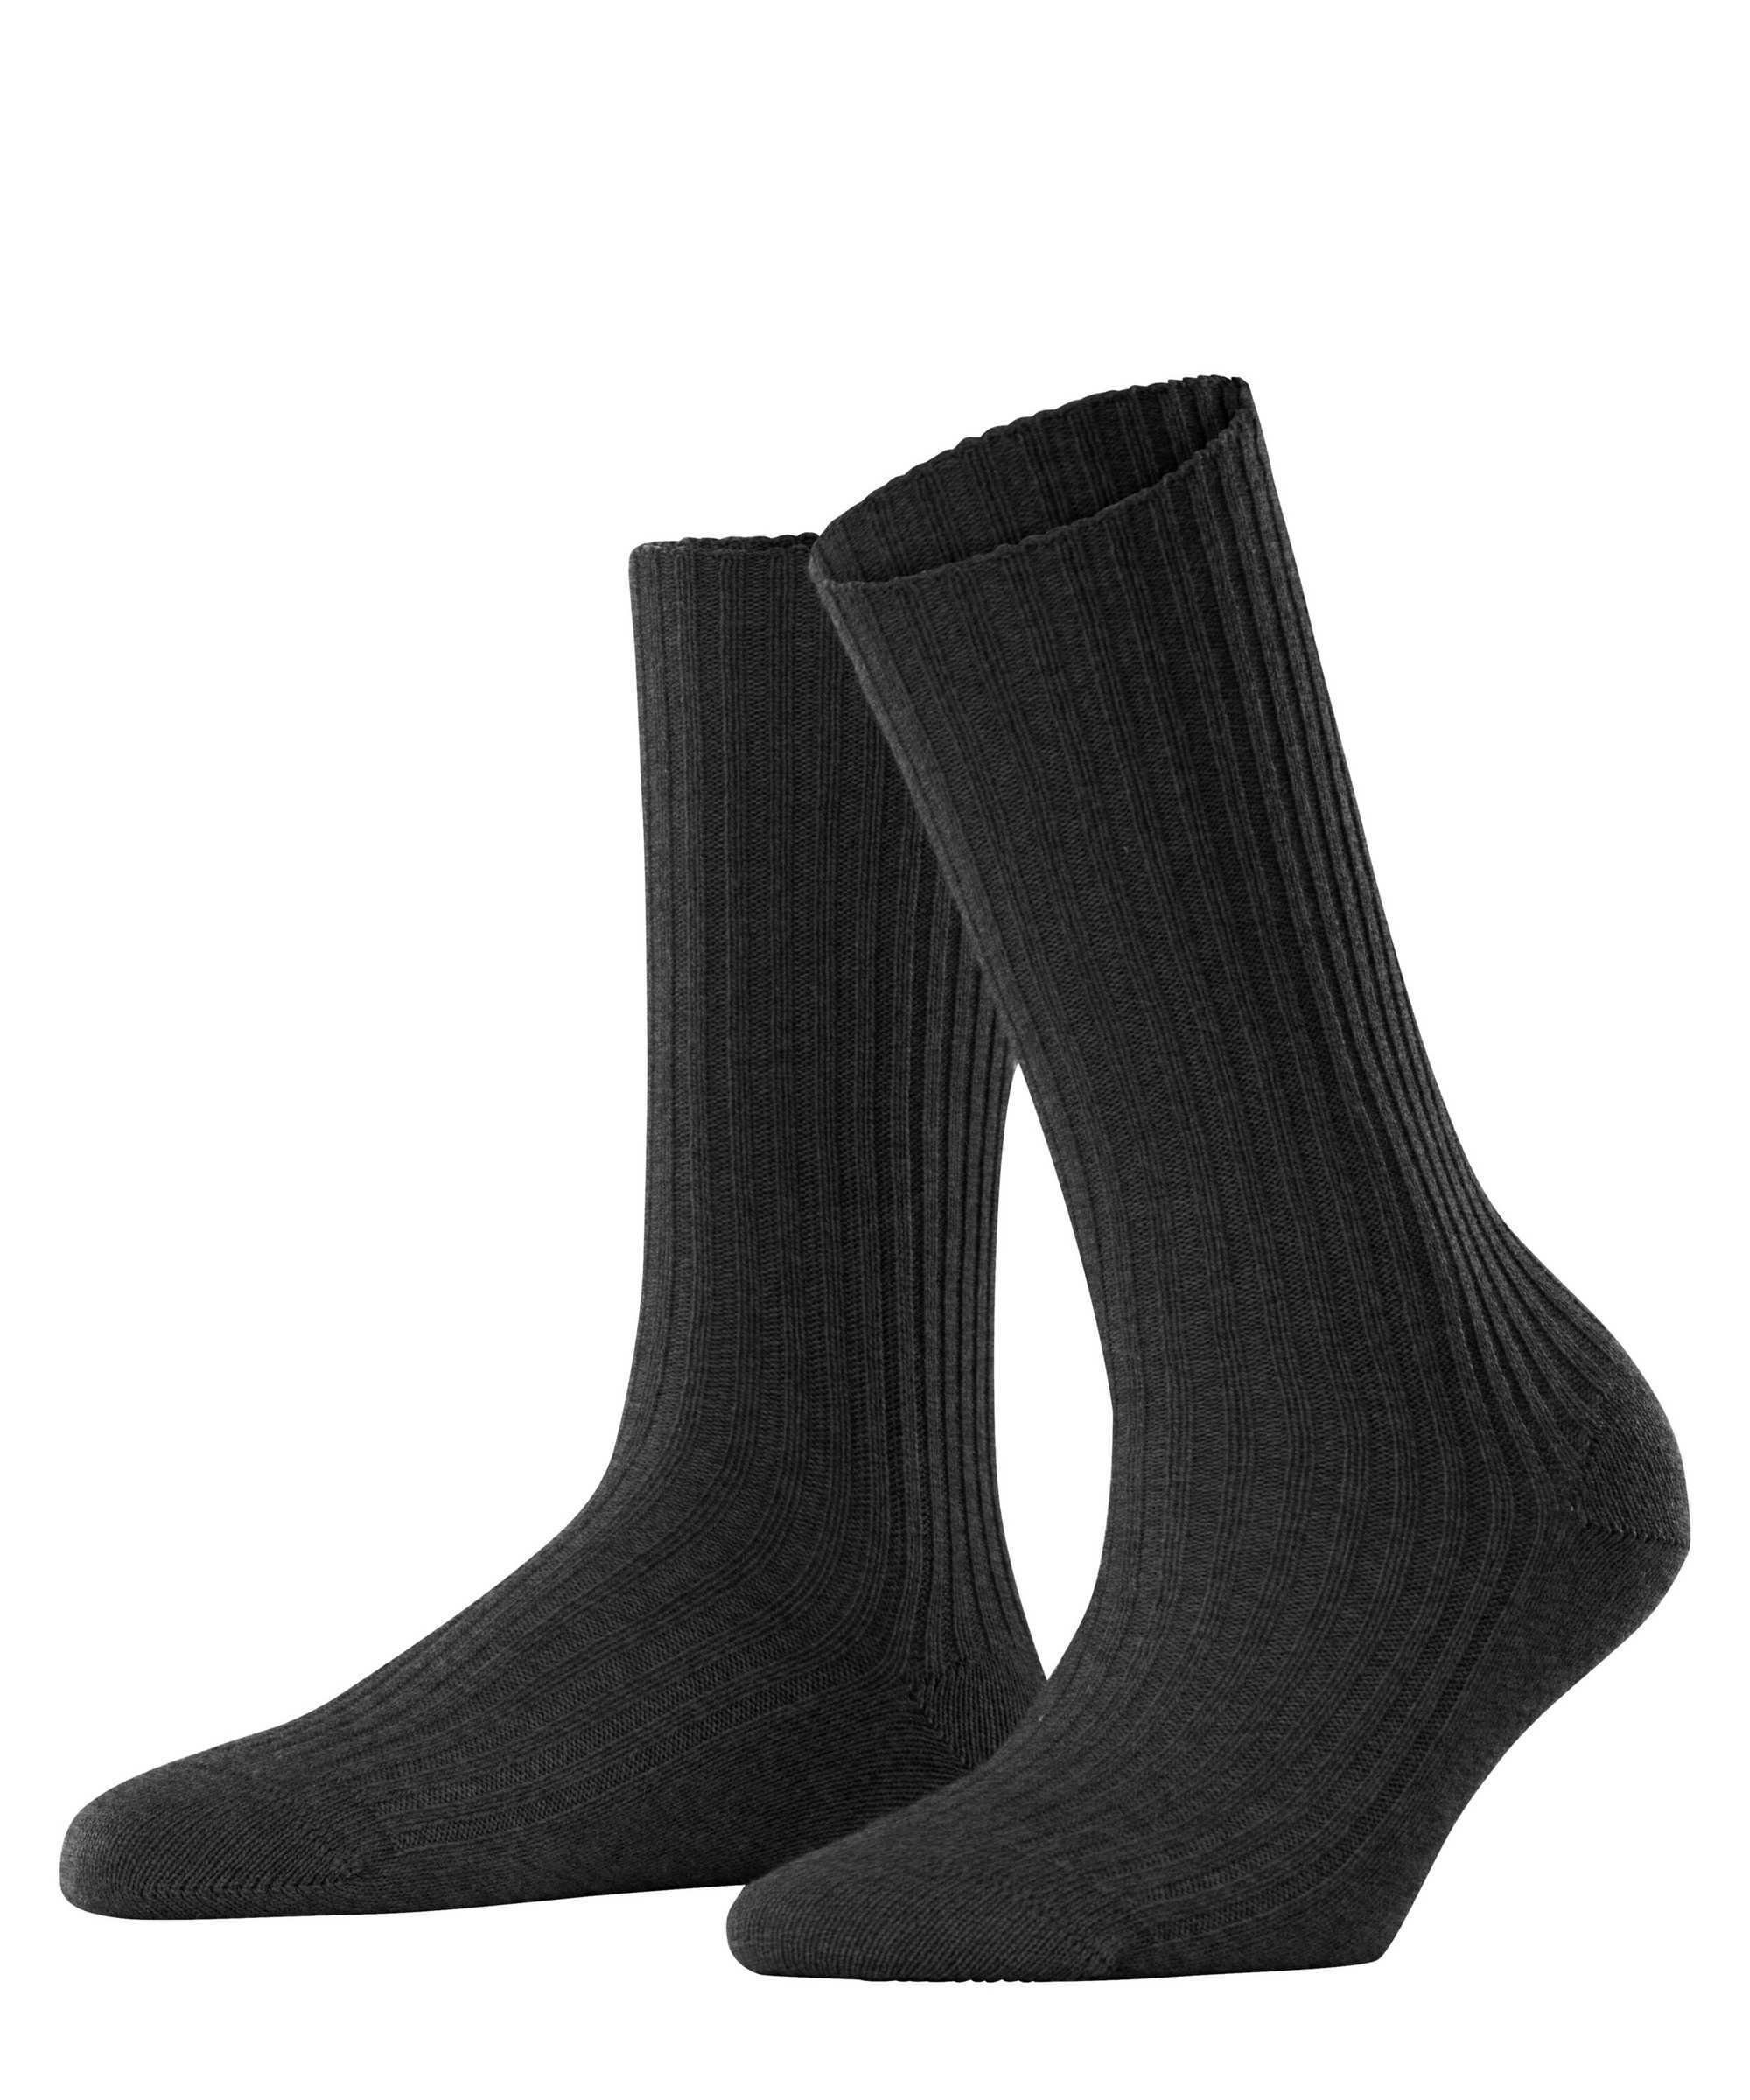 FALKE Kurzsocken Damen Socken - Cosy Wool Boot, Kurzsocken Dunkelgrau